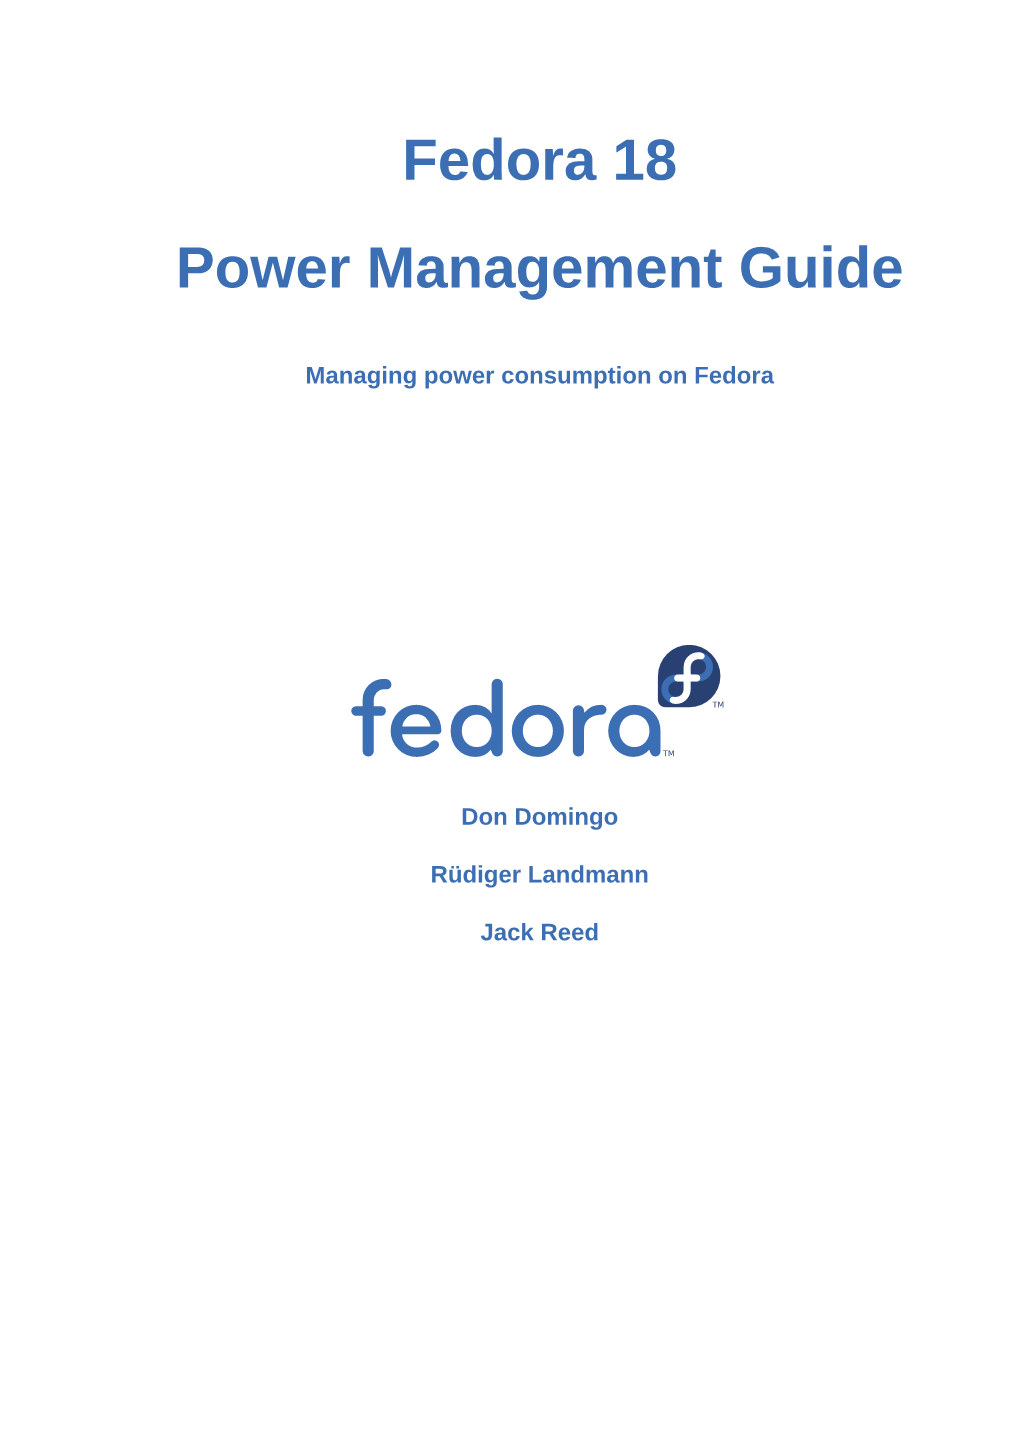 Fedora 18 Power Management Guide